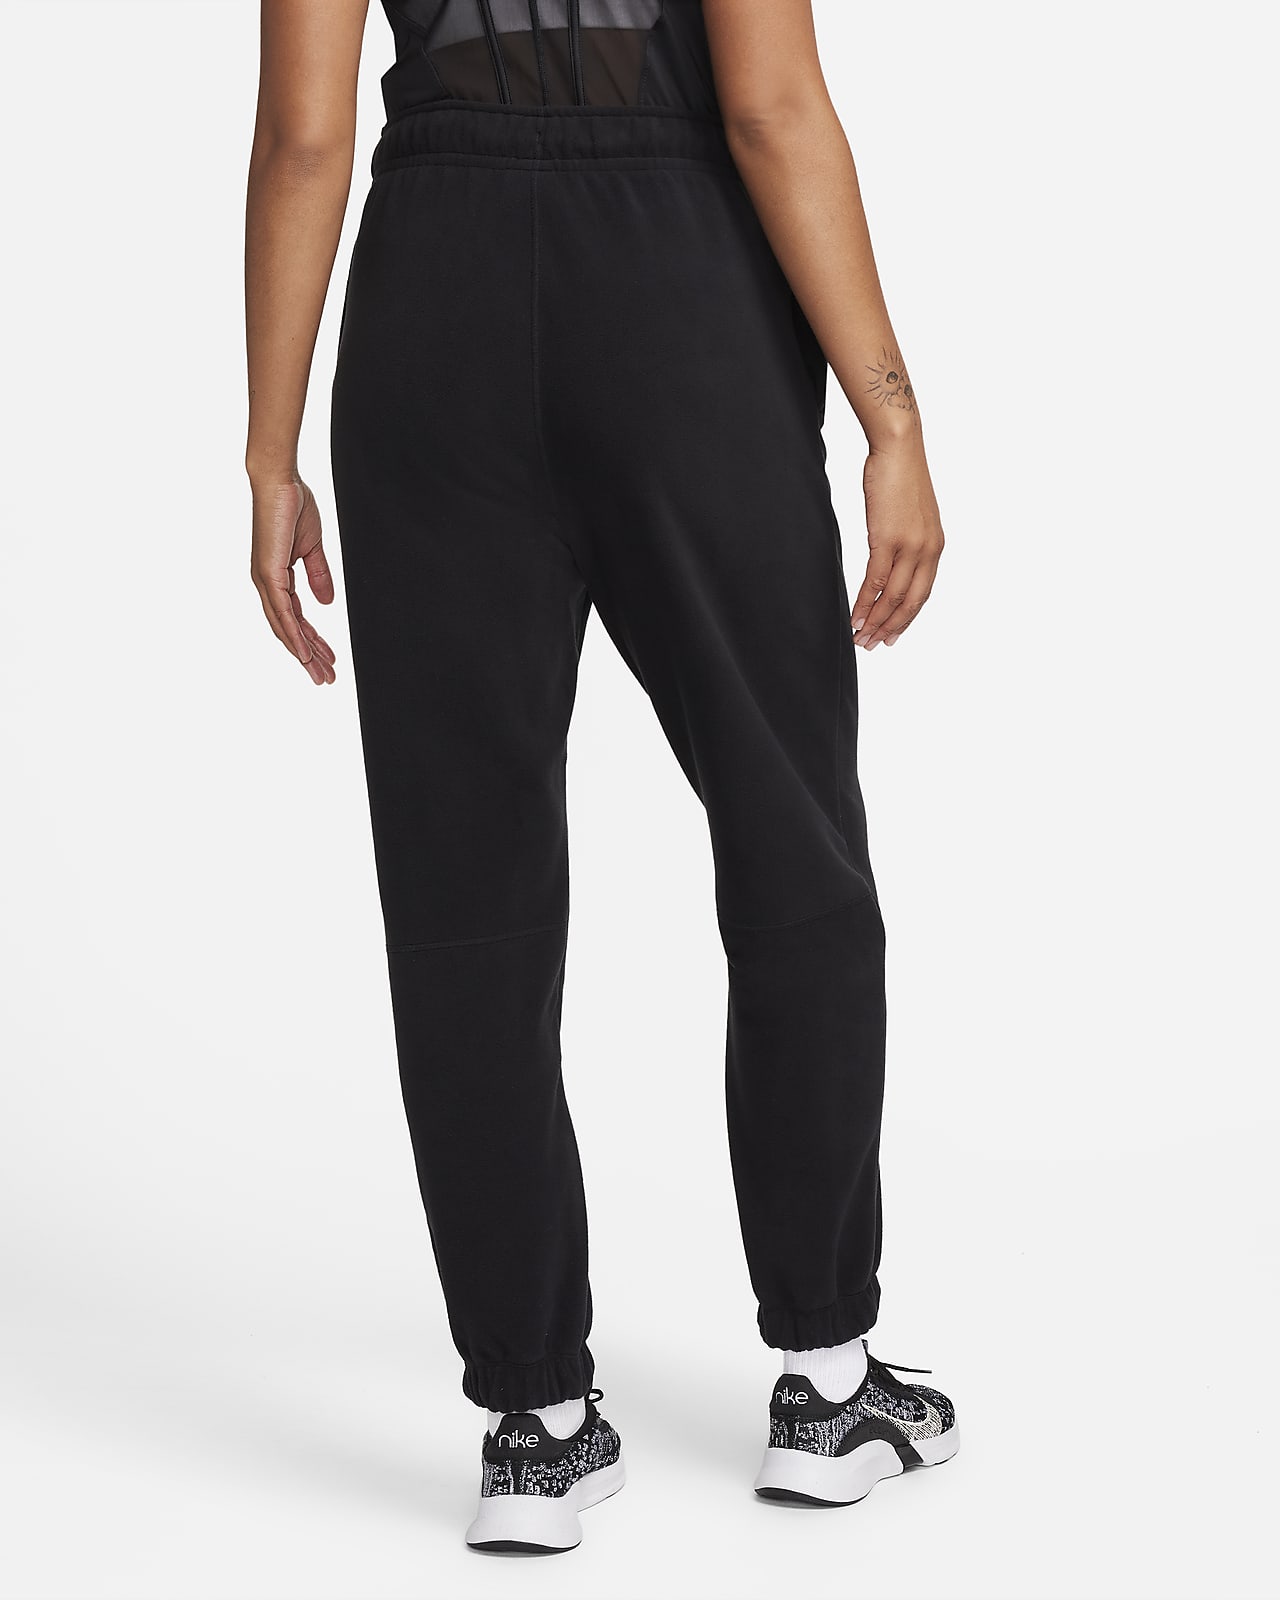 Women's Nike Air 7/8 Trousers Sweatpants Pants S Purple Plum Cuffed Pant-Sz  S